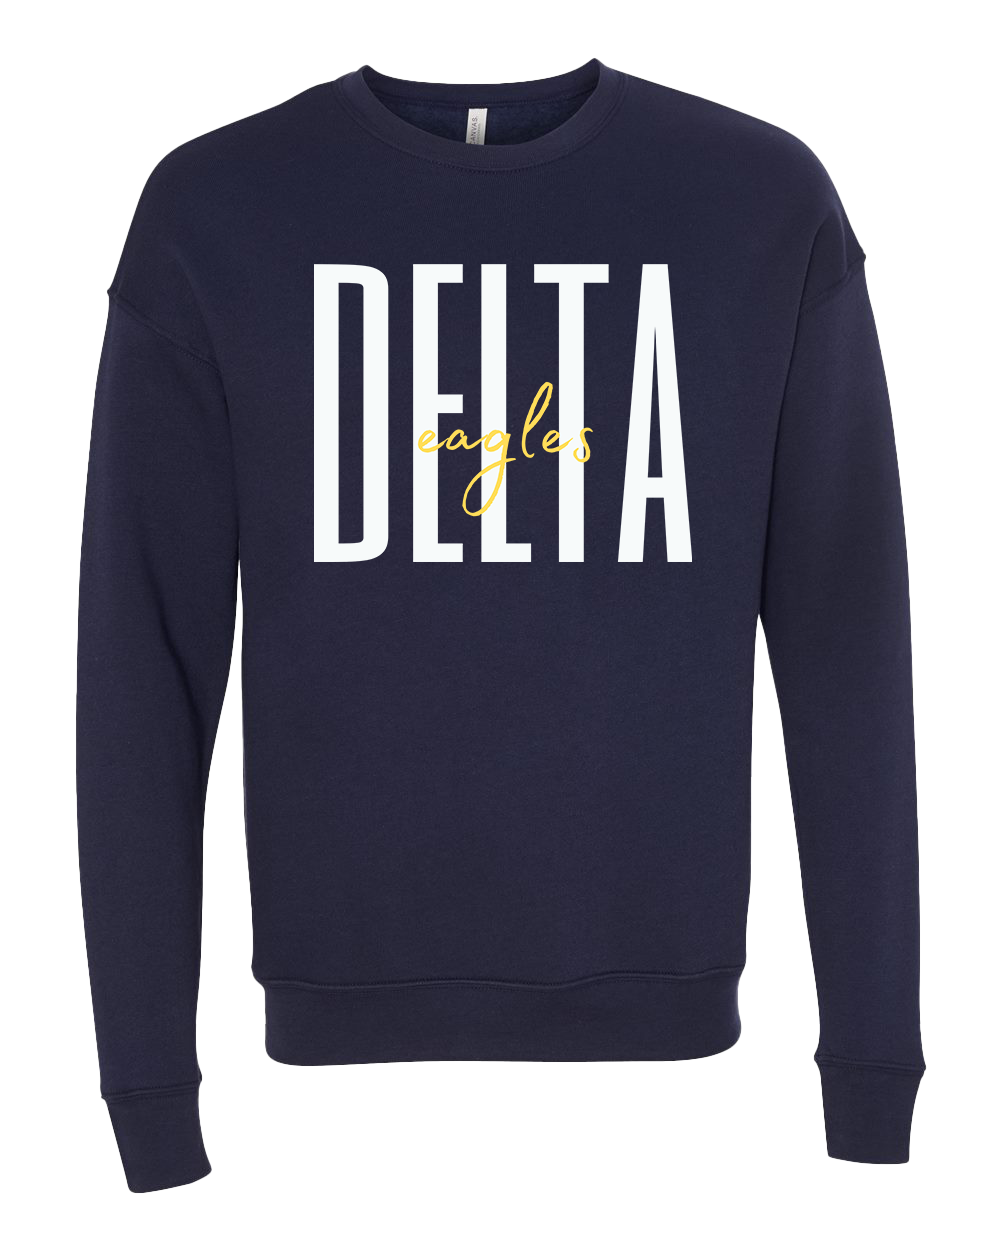 Delta Eagles Script Crew Sweatshirt - Navy